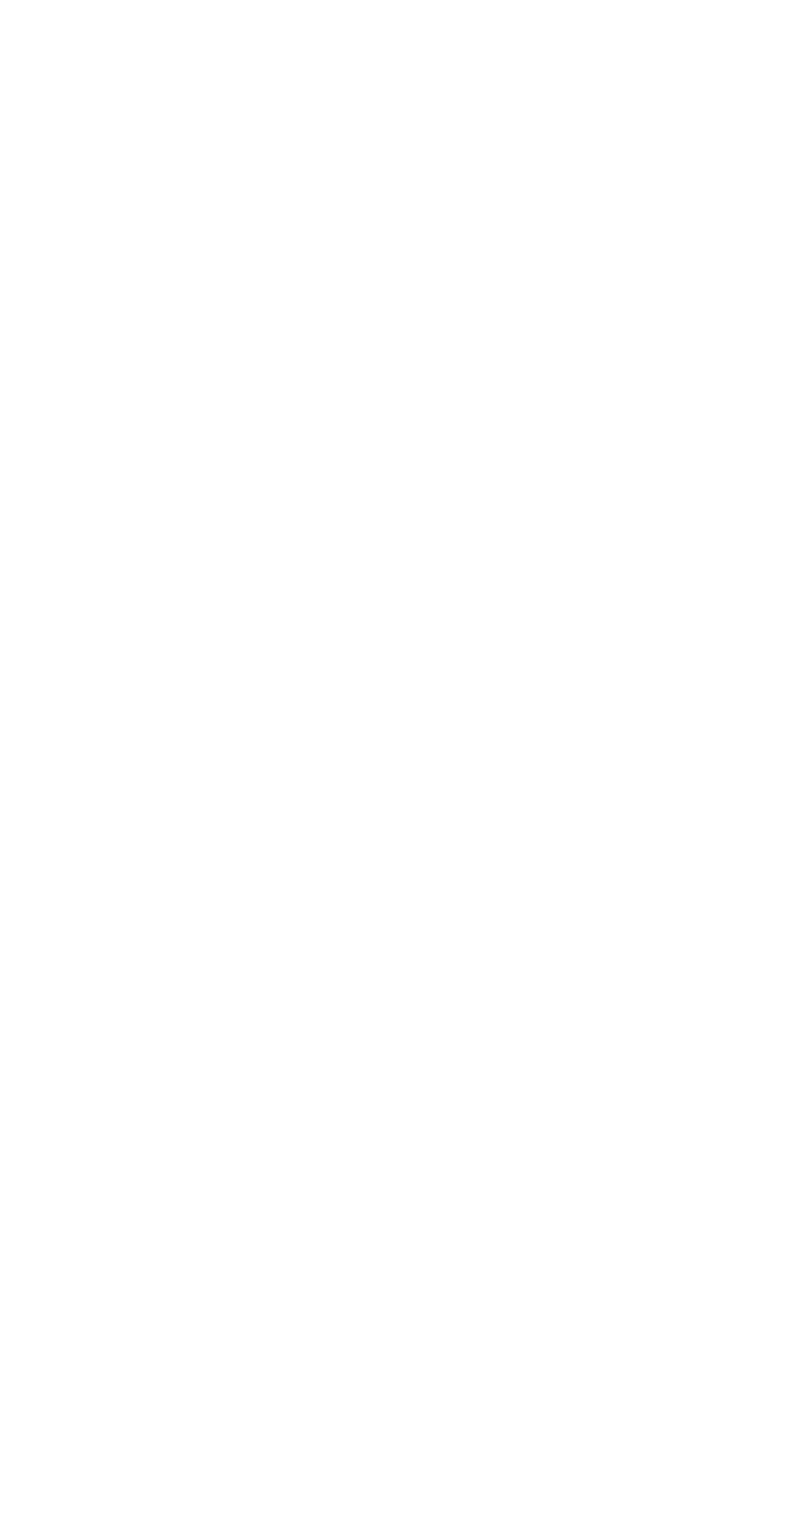 Elevance Health logo pour fonds sombres (PNG transparent)